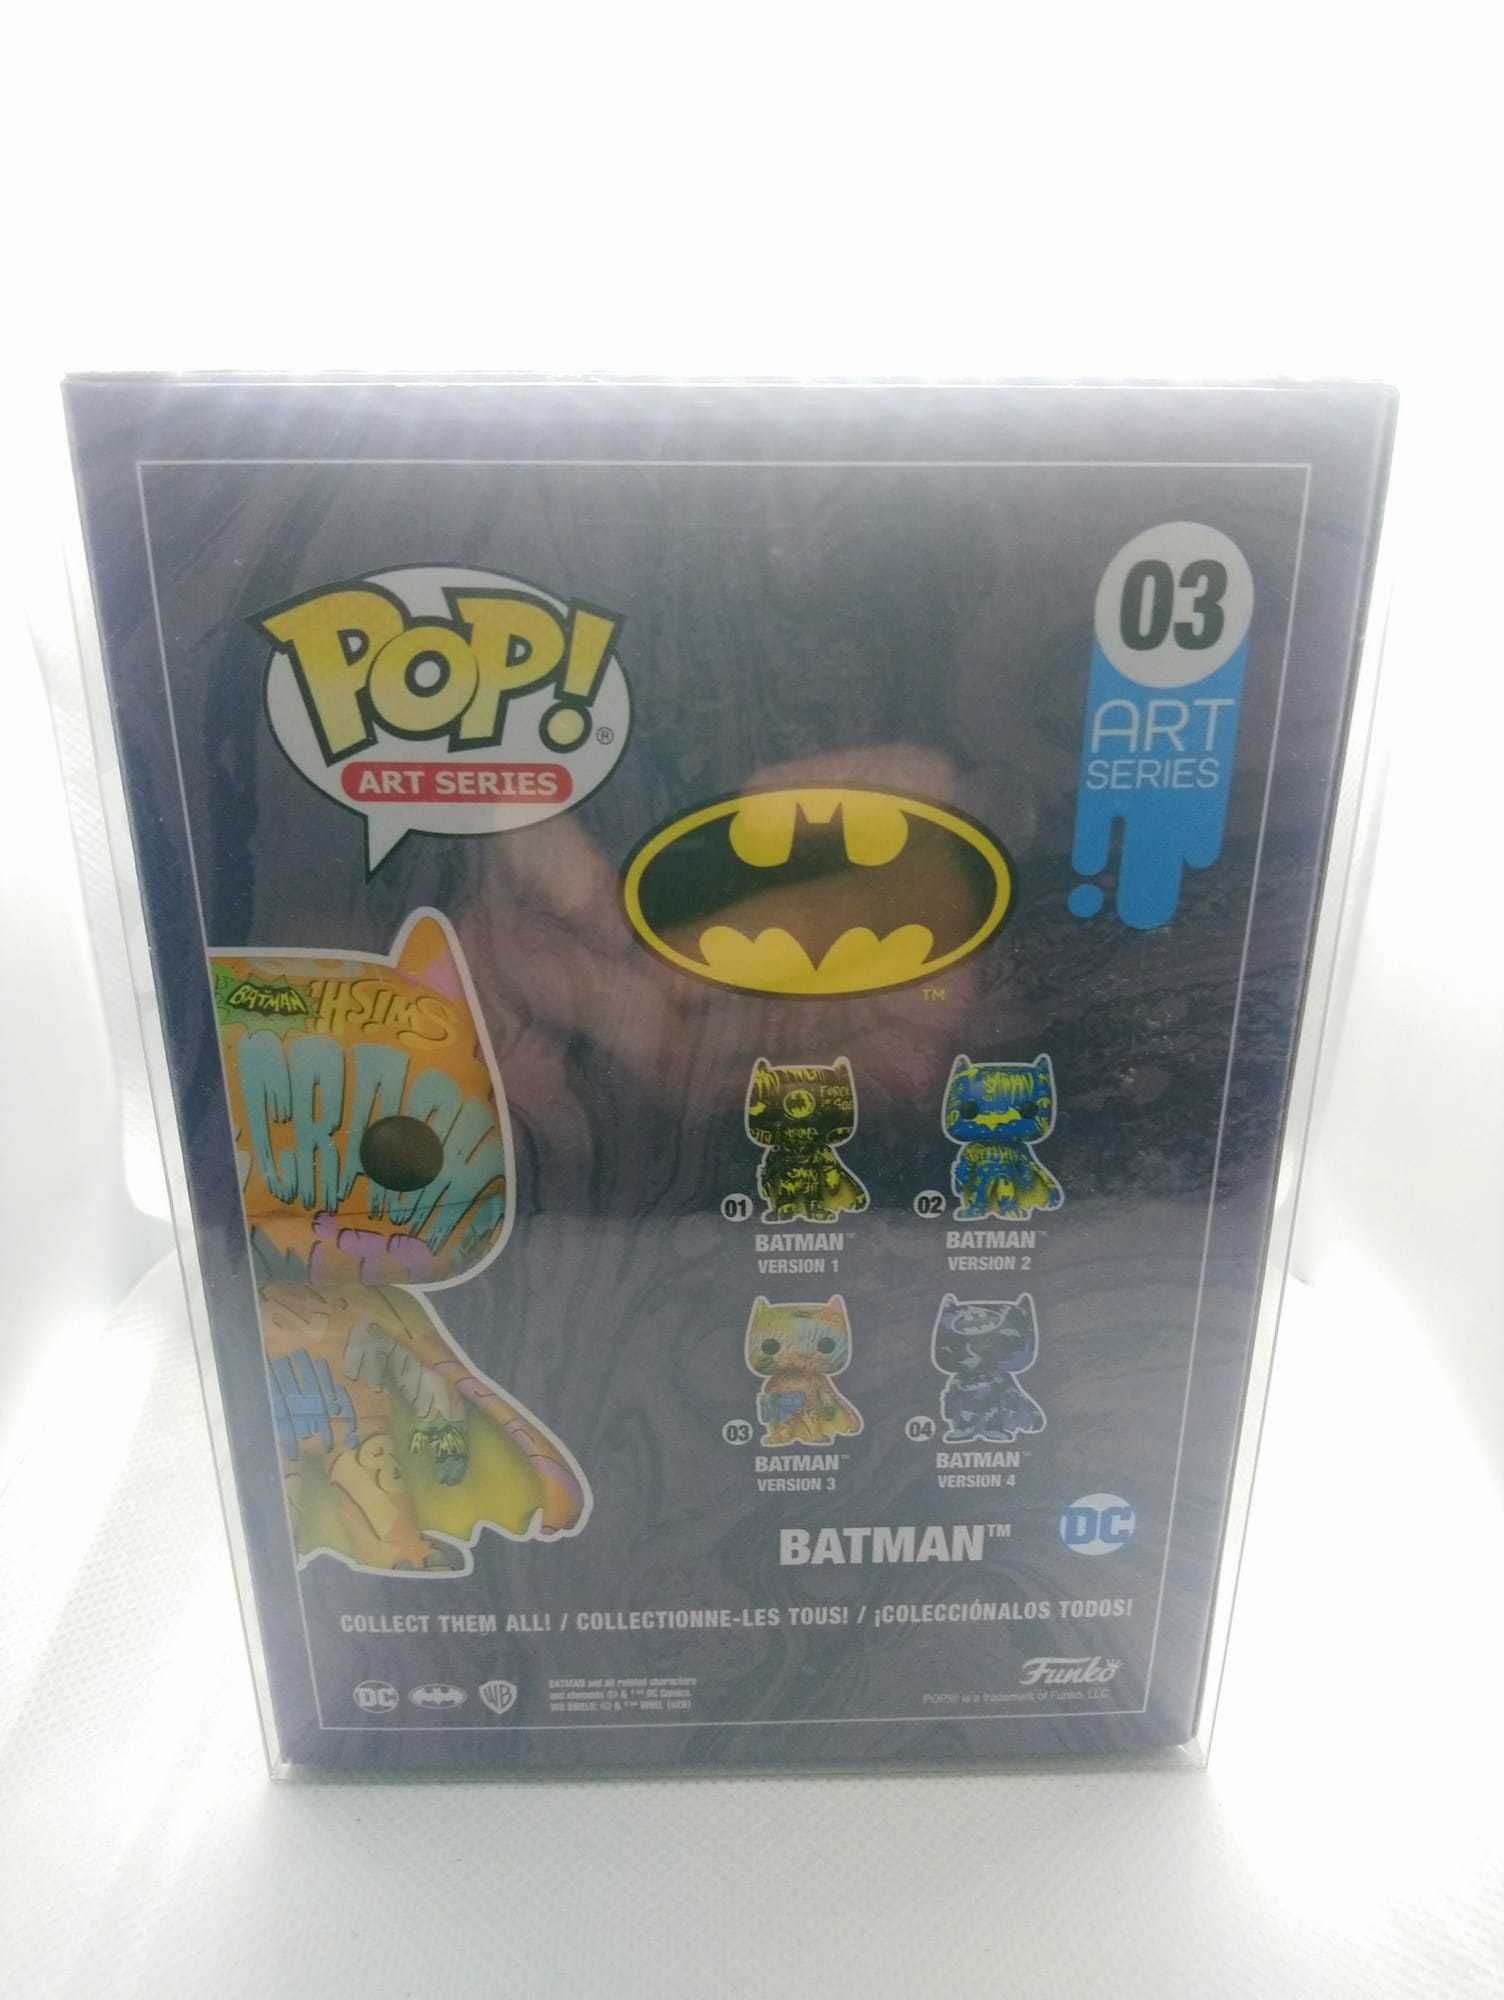 Funko Pop Batman Art Series 03